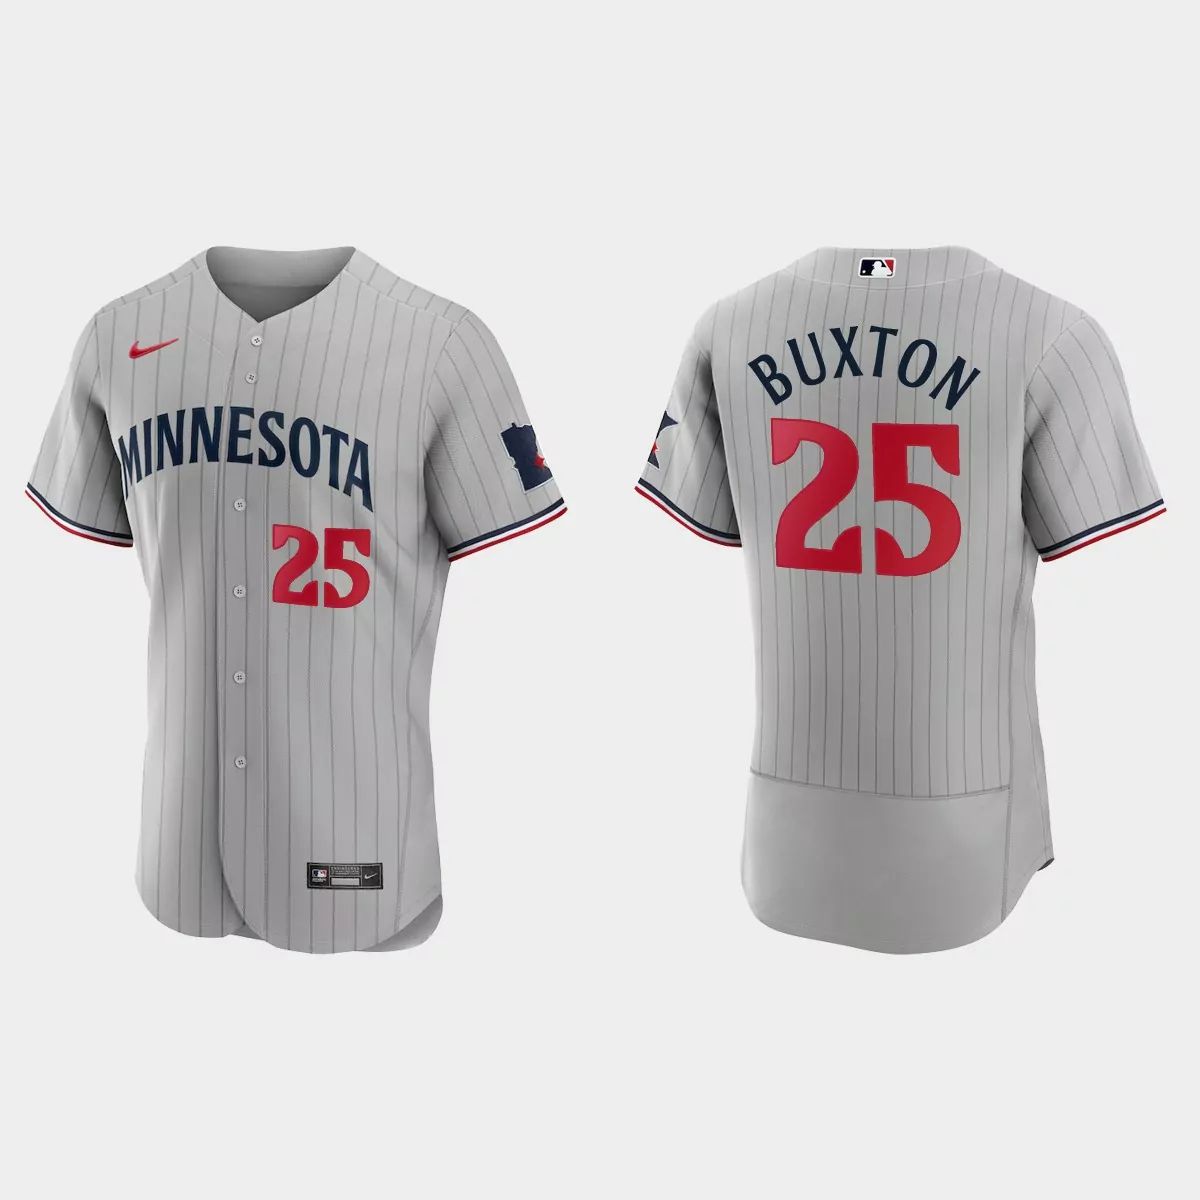 Byron Buxton Minnesota Twins White Home Jersey by Nike